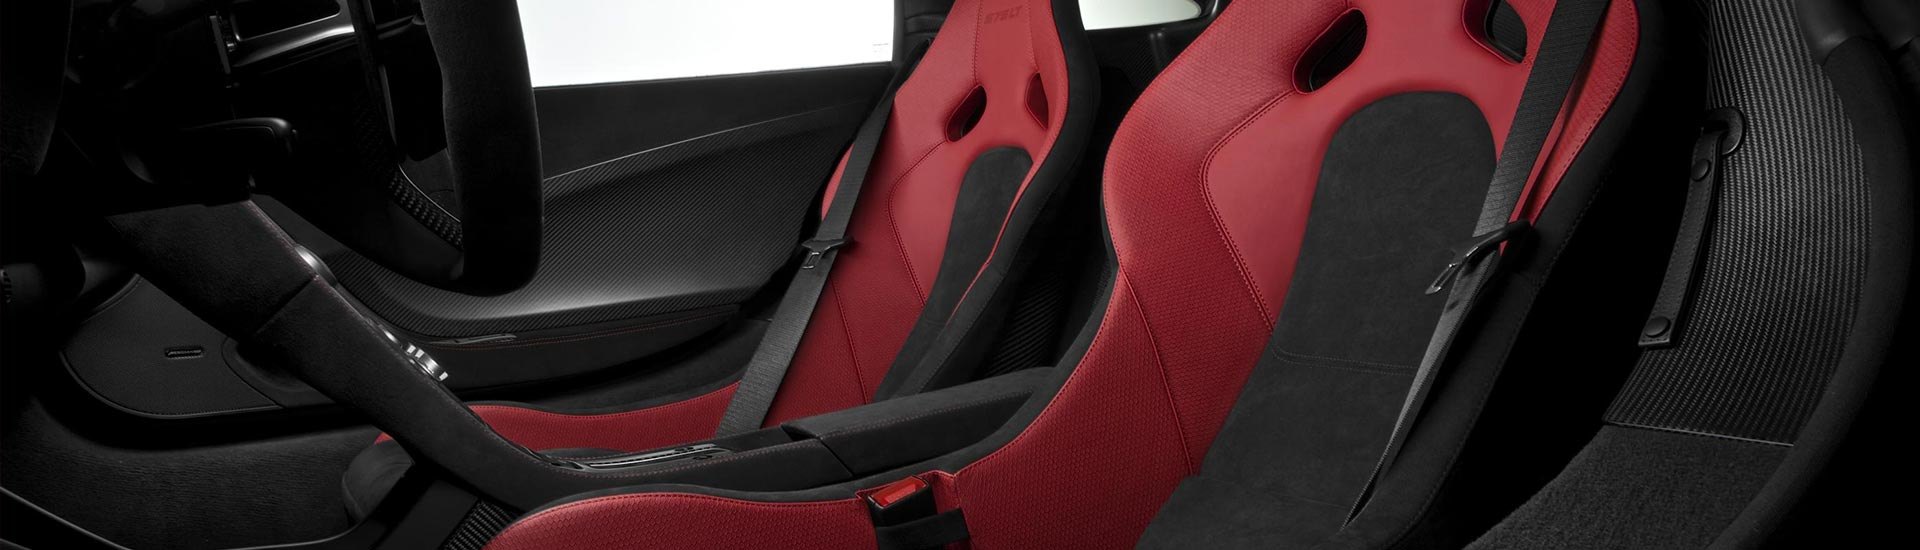 Pontiac Firebird Seat Hardware